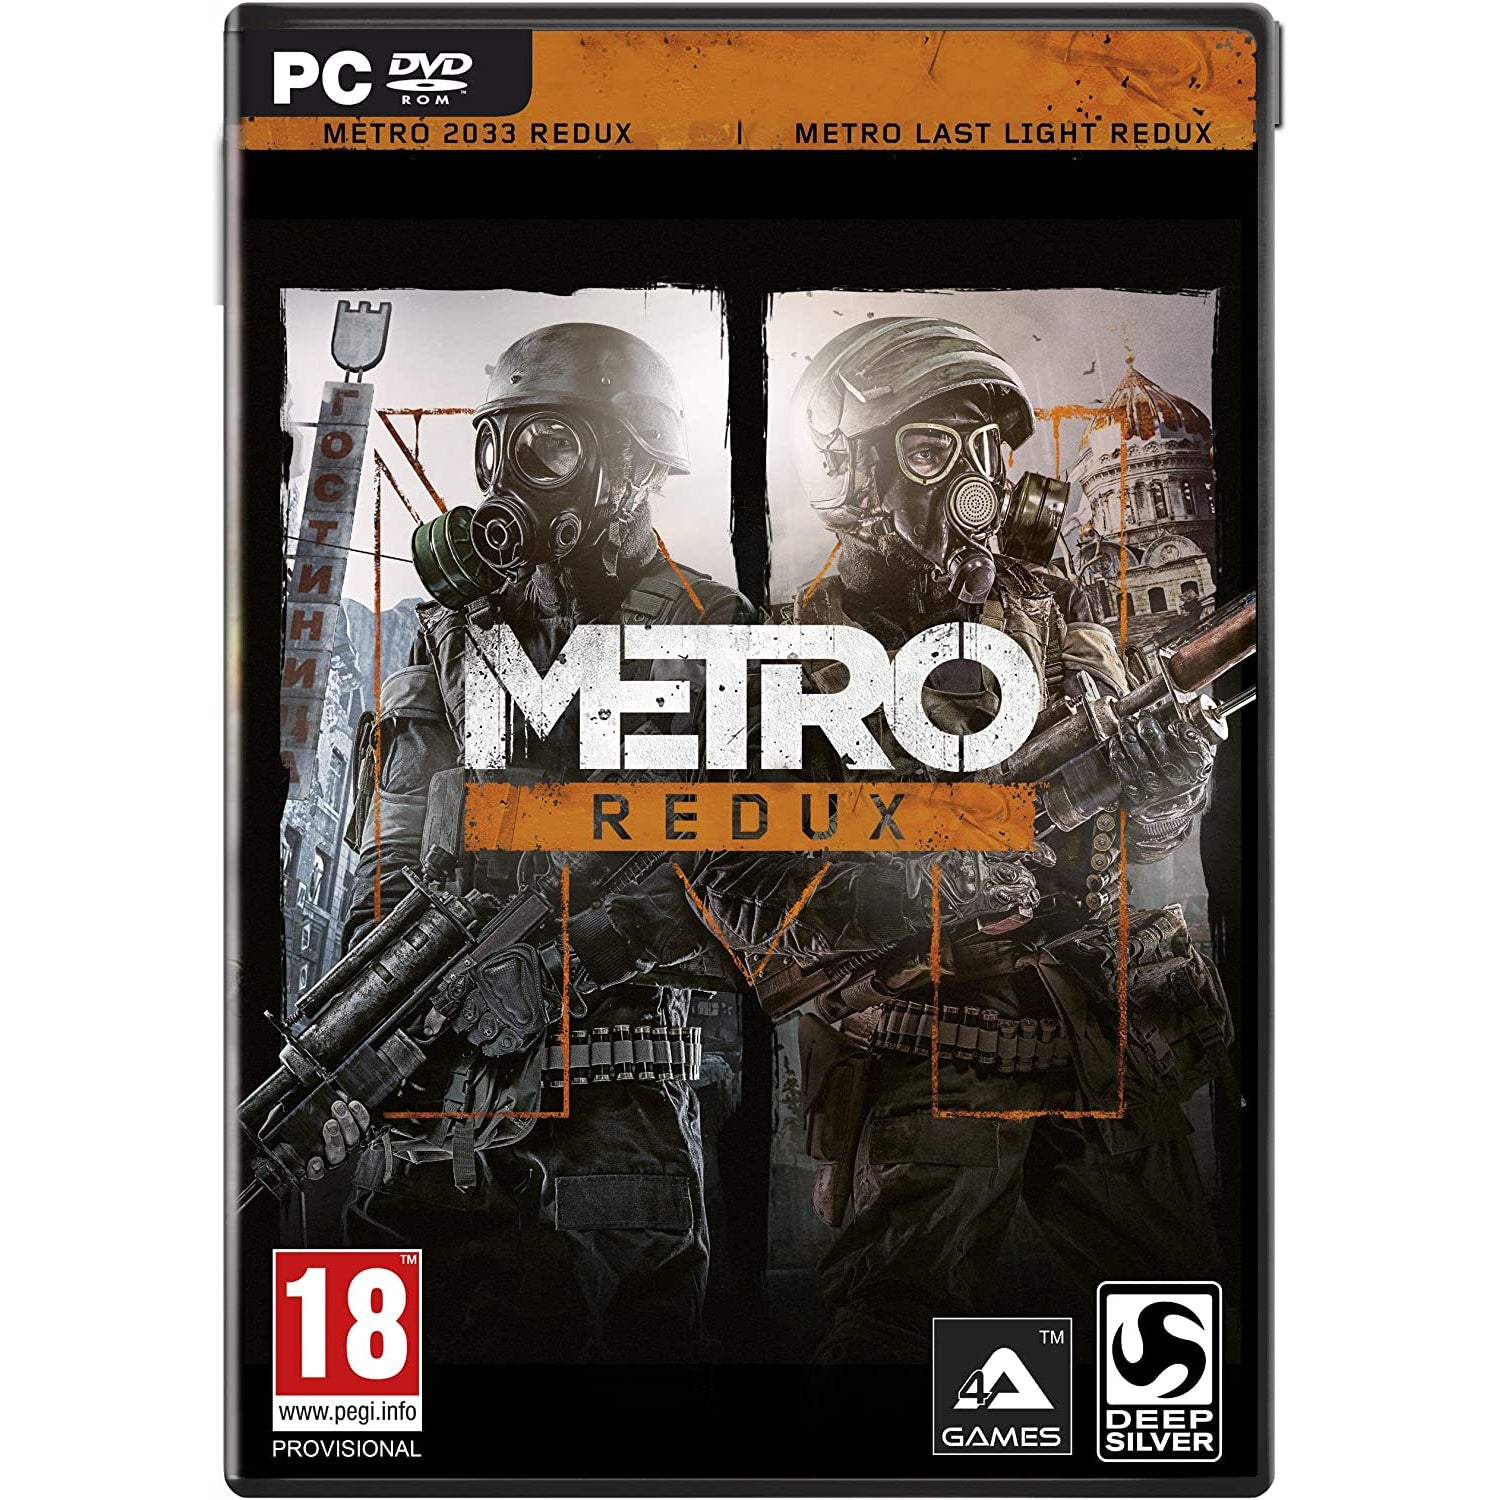 Metro Redux (PC DVD)